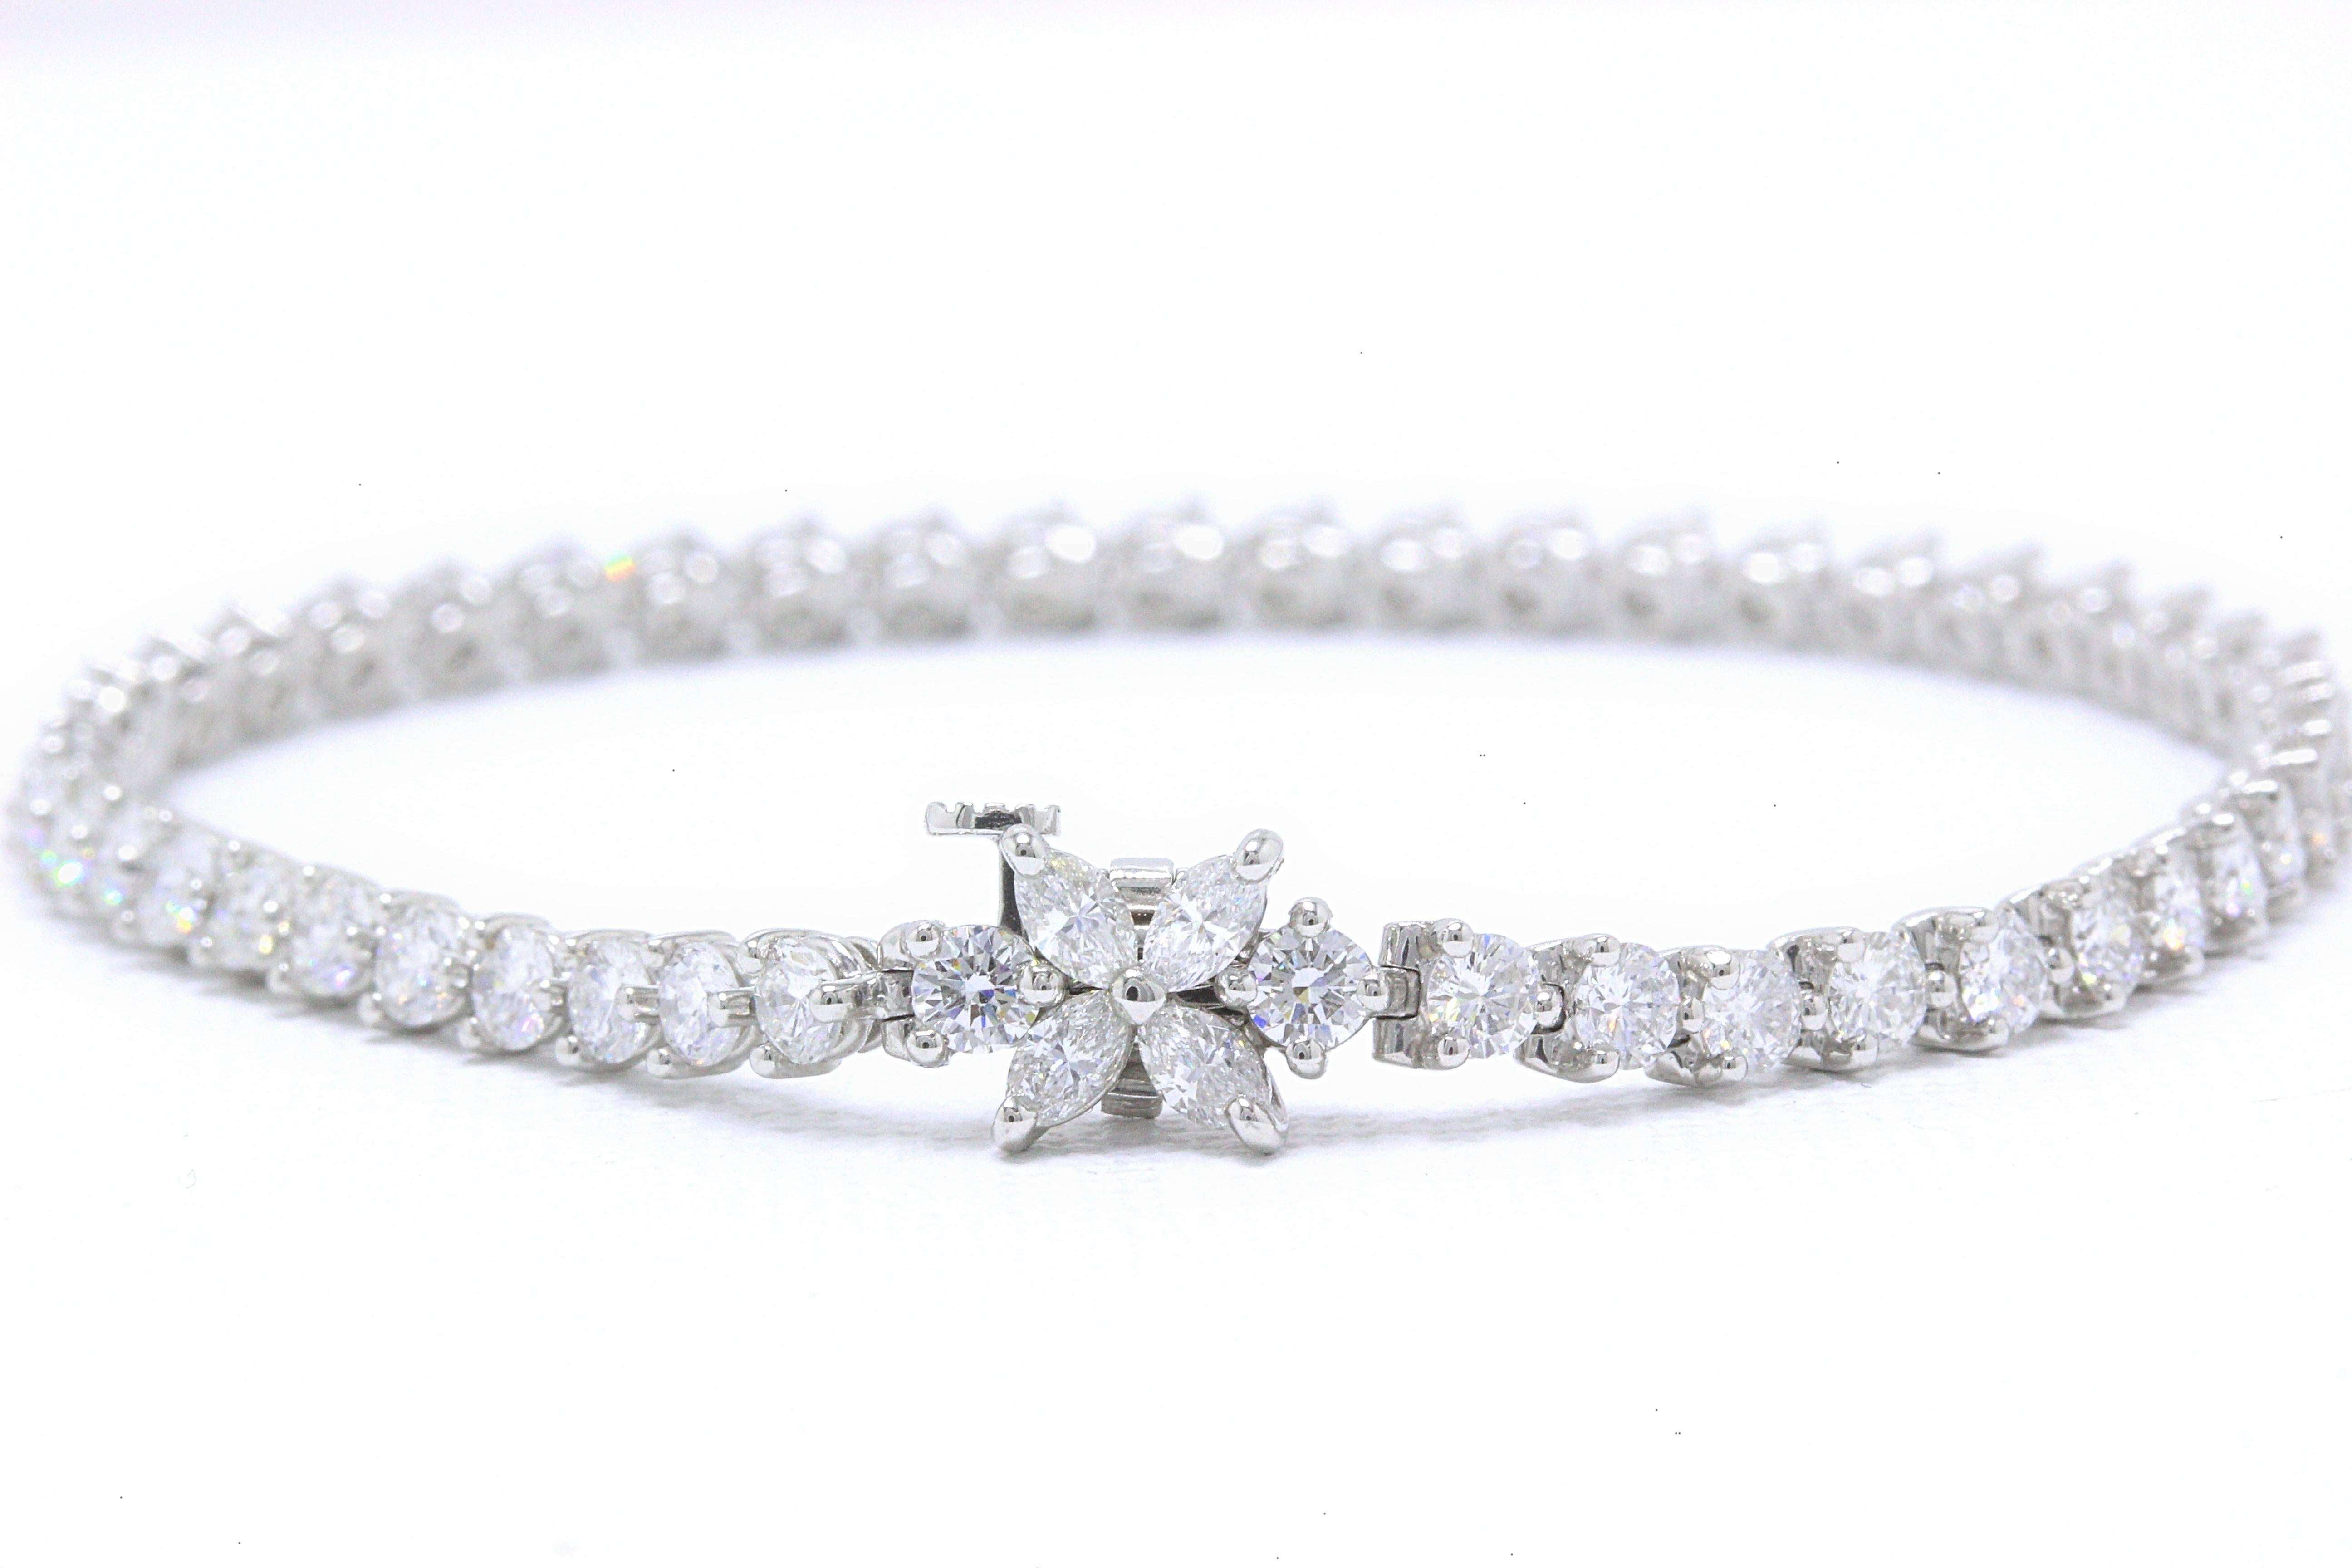 Tiffany & Co Victoria Line Diamond Bracelet in Platinum.  This Bracelet consists of 50 Round Brilliant Cut Diamonds weighing 3.85 TCW G - H color, VVS1 - VVS2 clarity with 4 Marquise Brilliant Cut Diamonds weighing 0.28 TCW G - H color, VVS1 - VVS2